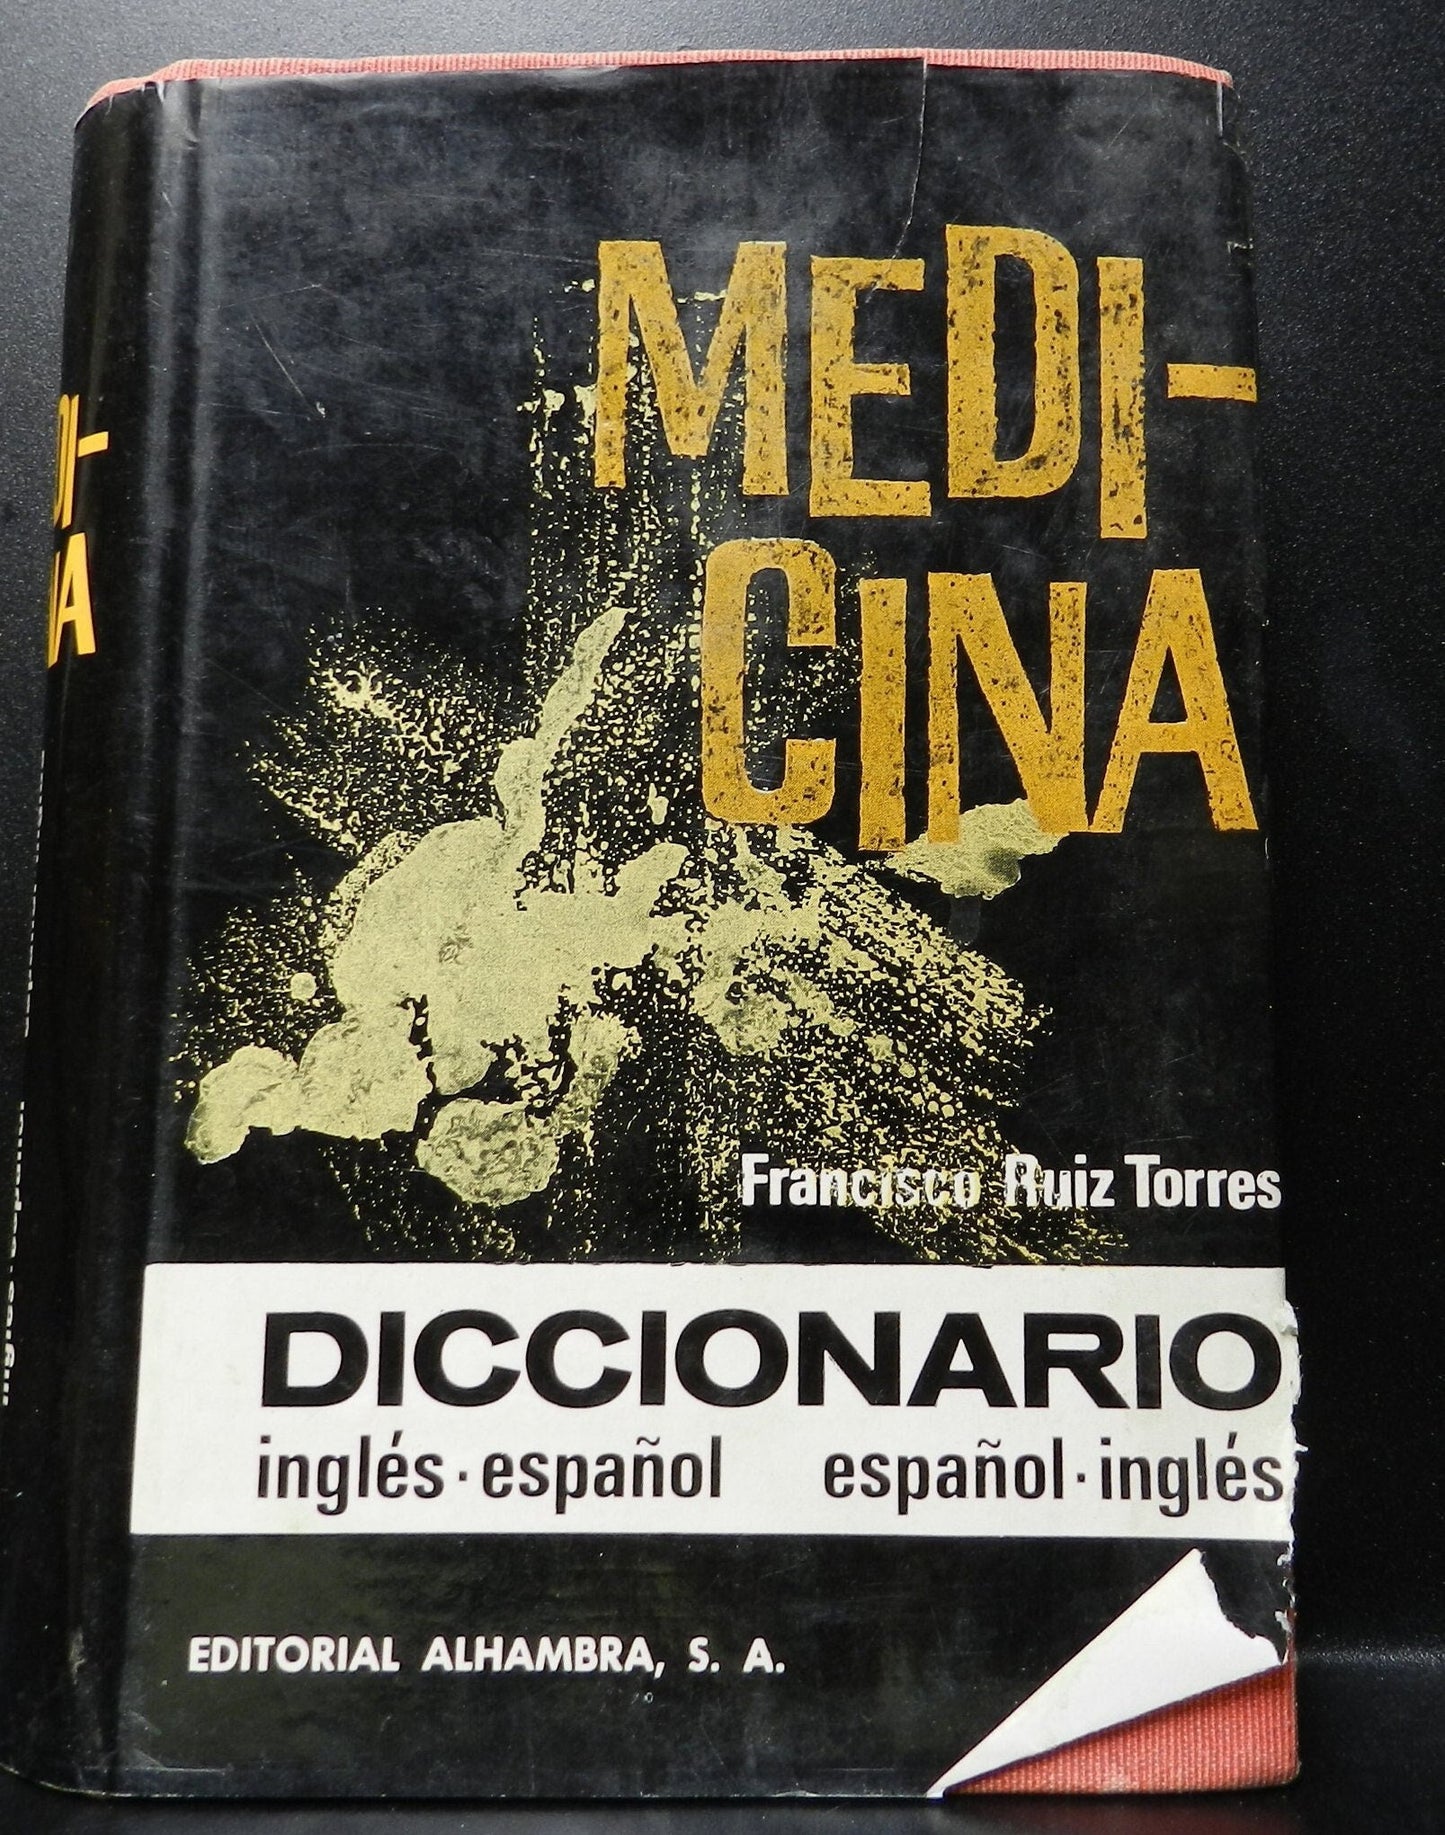 Vintage Medical Dictionary in Spanish & English Book "Medicina Diccionario Ingles-Espanol Espanol-Ingles" 1968 Printed in Spain